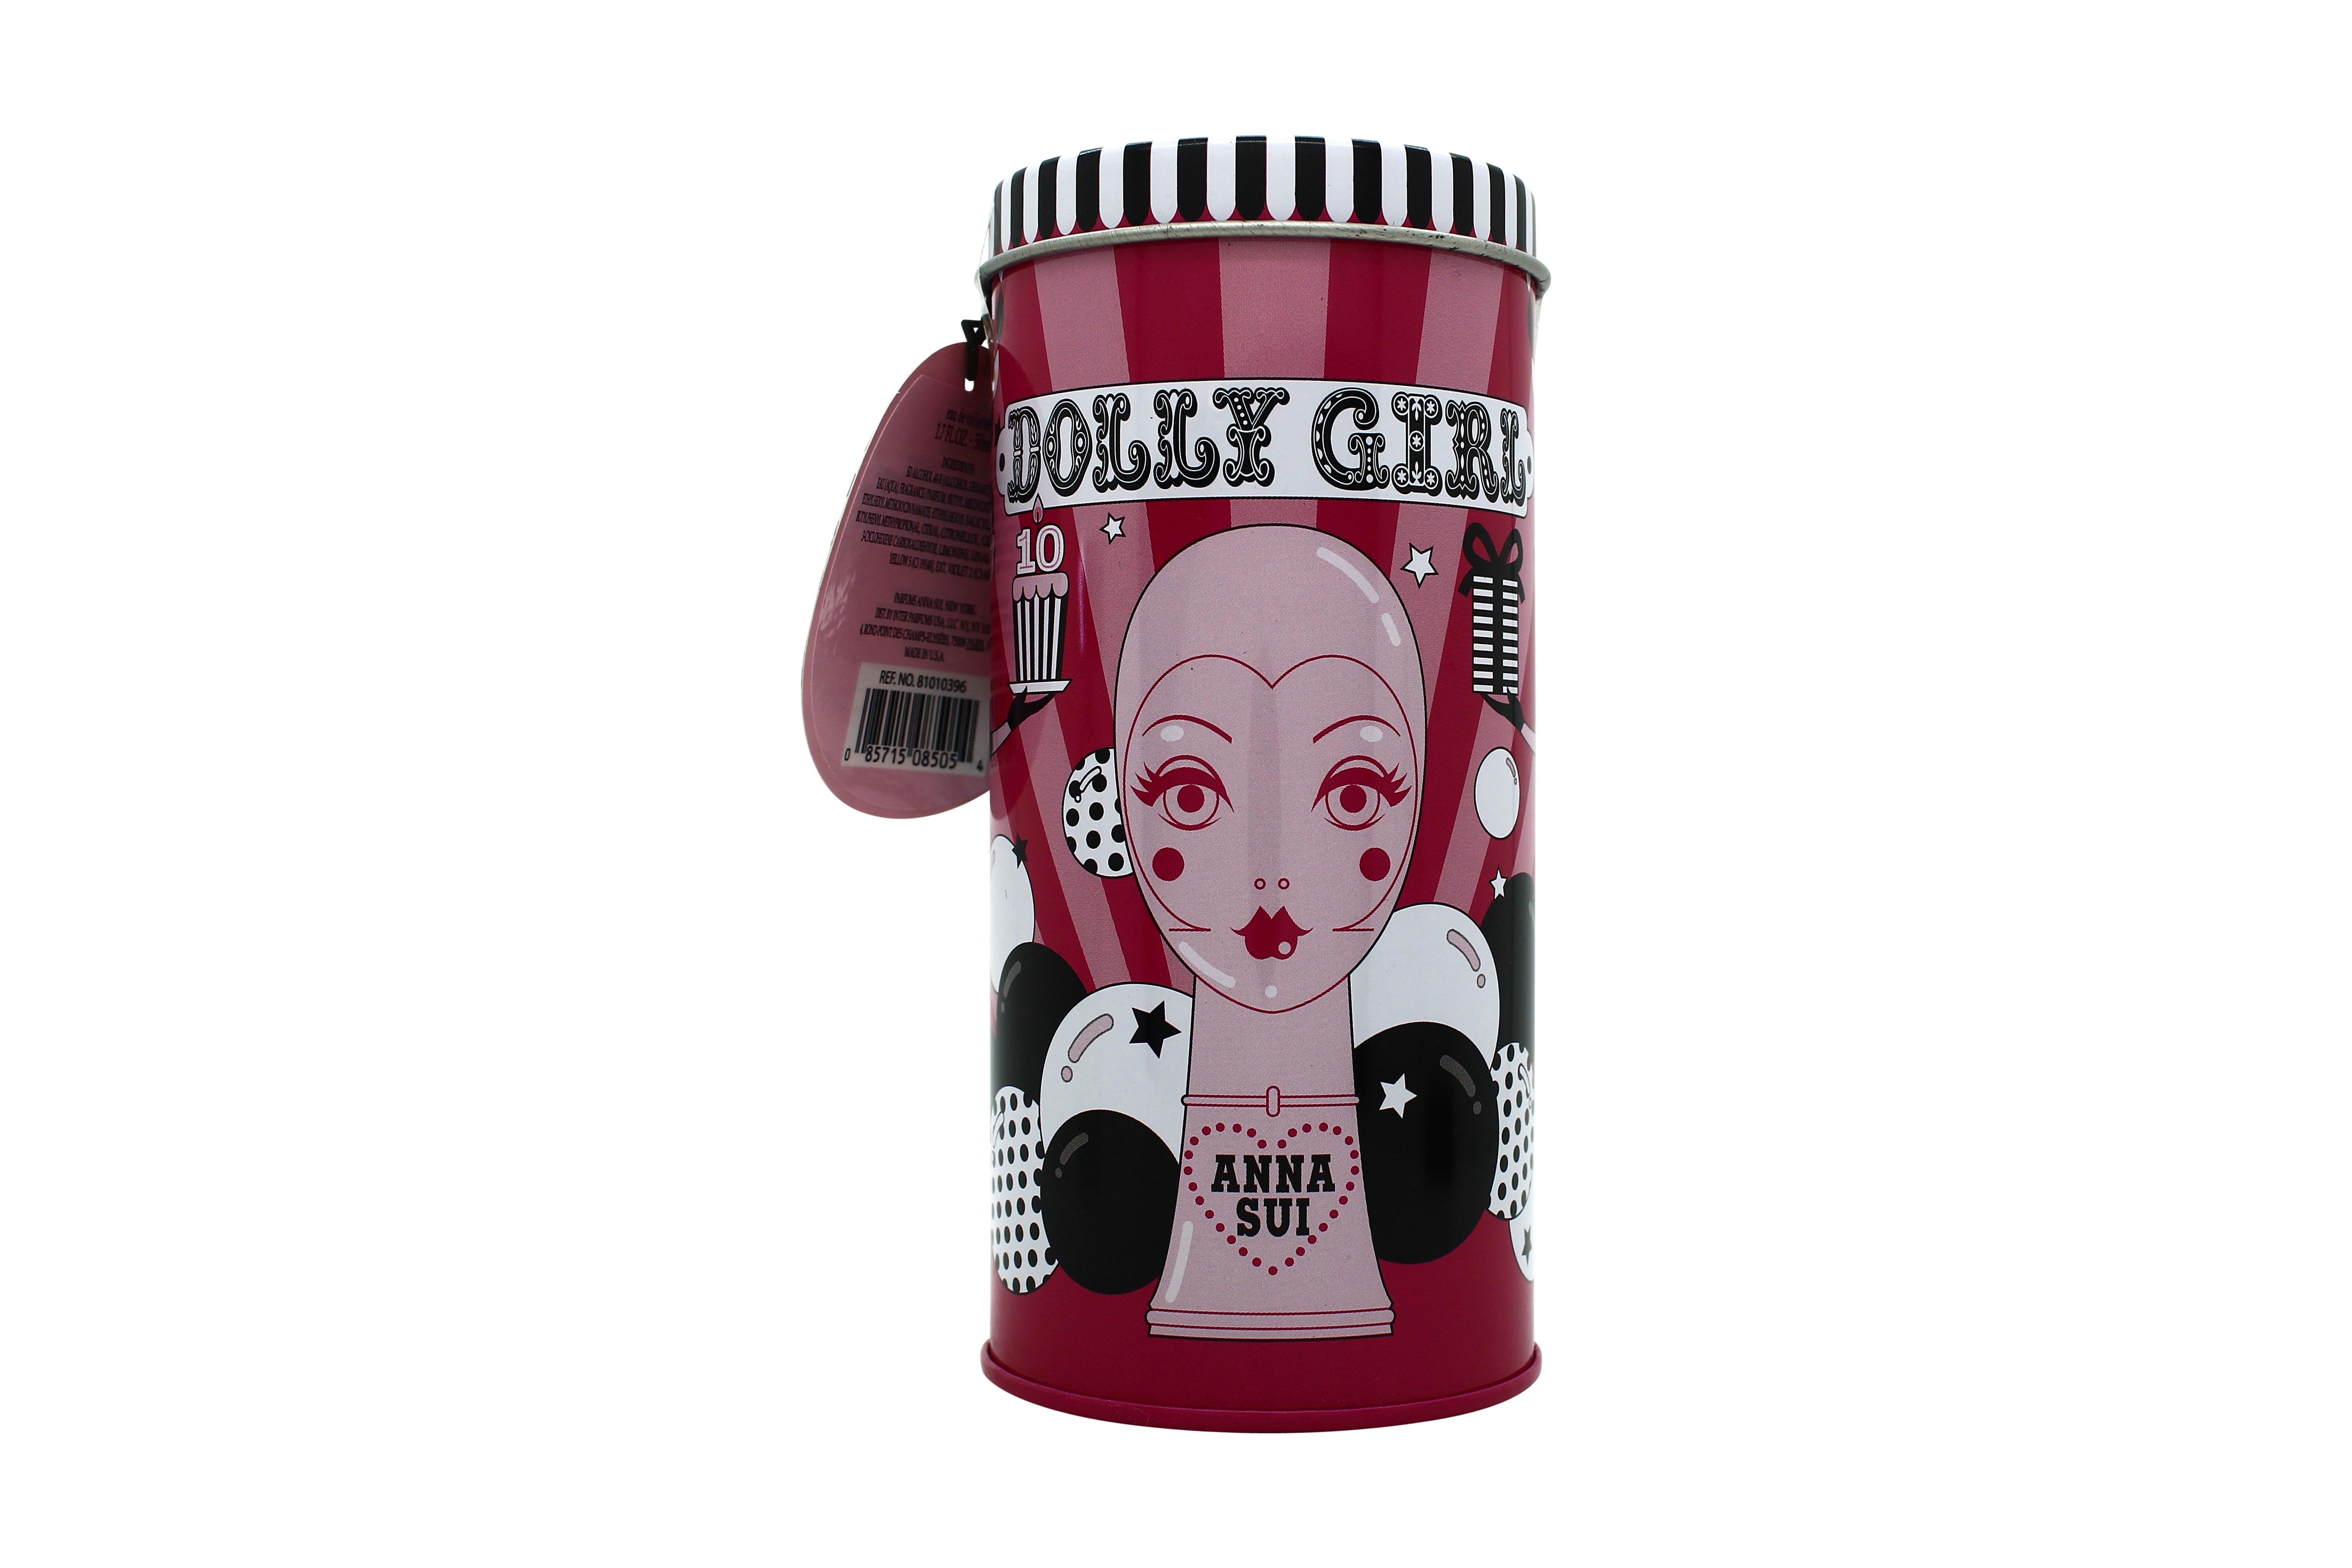 Anna Sui Dolly Girl Eau de Toilette 50ml Spray - Limited Edition